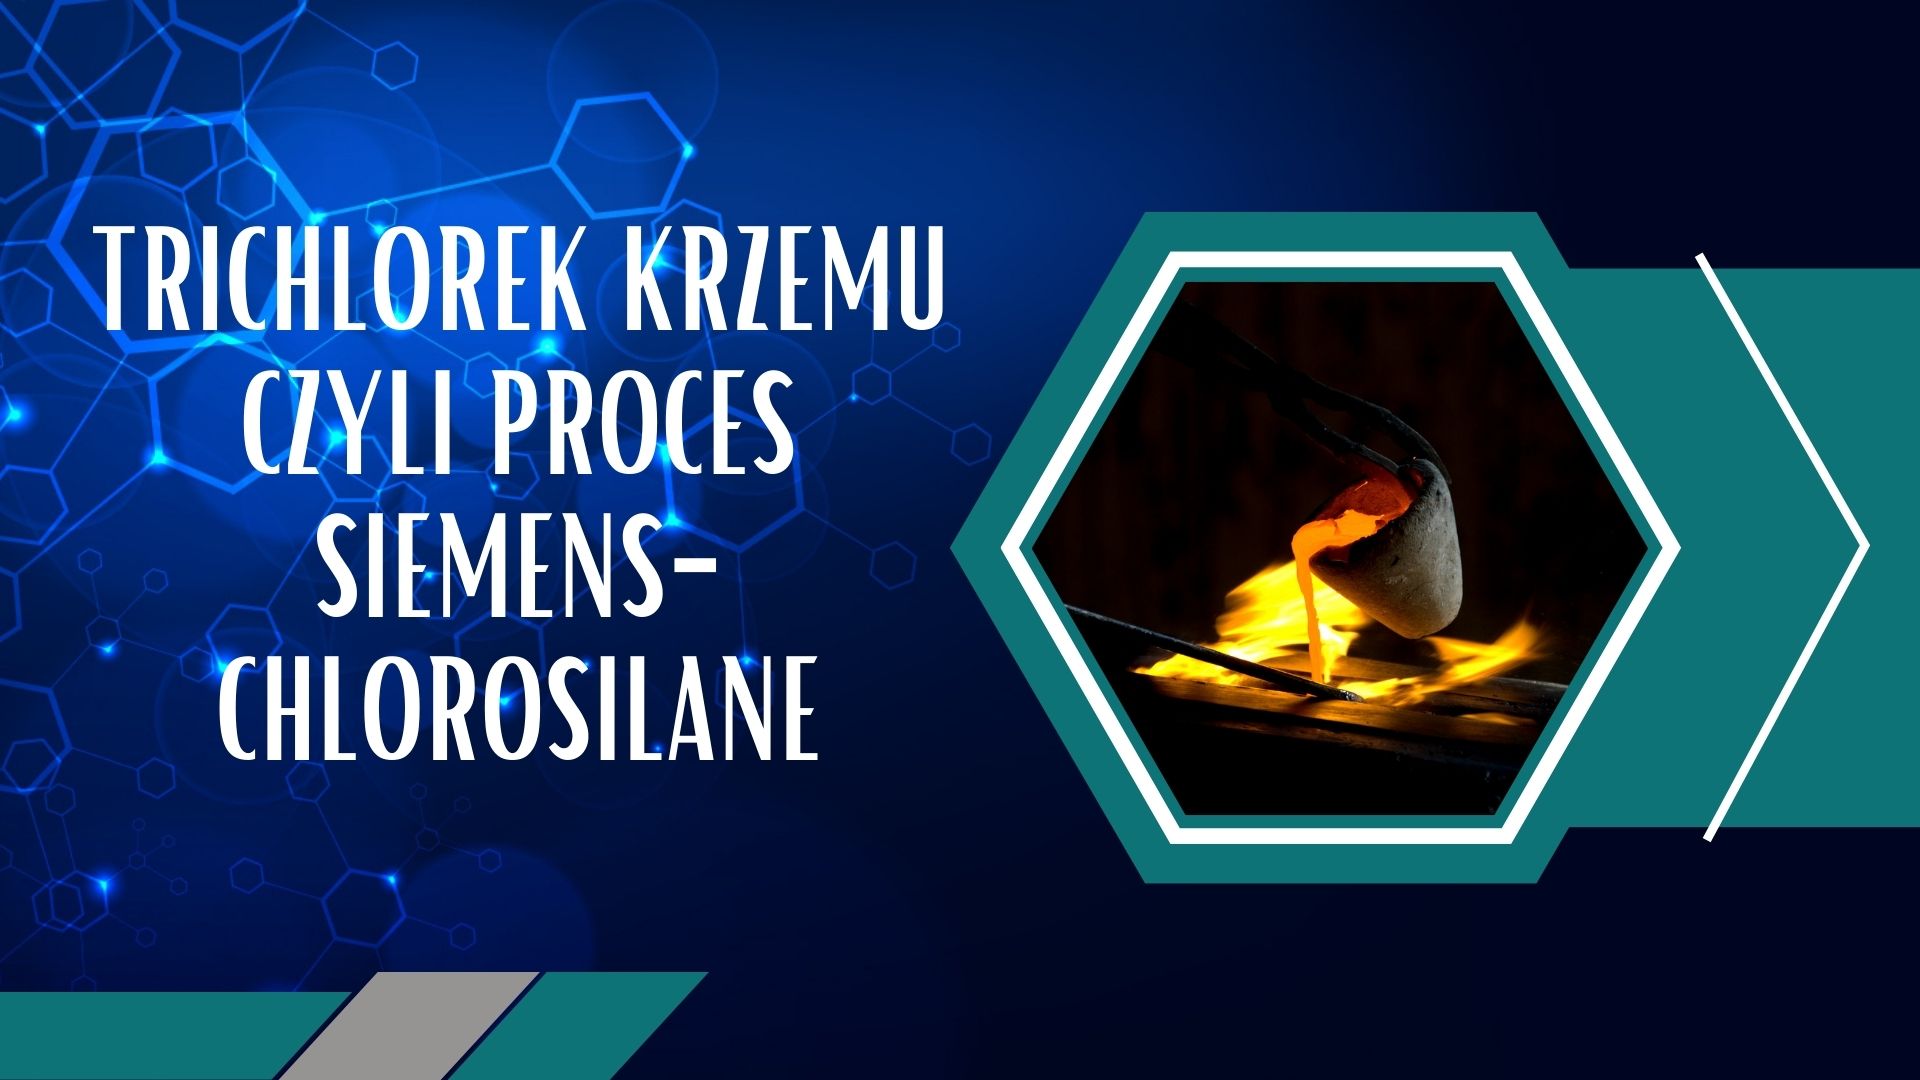 Trichlorek krzemu czyli proces Siemens-Chlorosilane